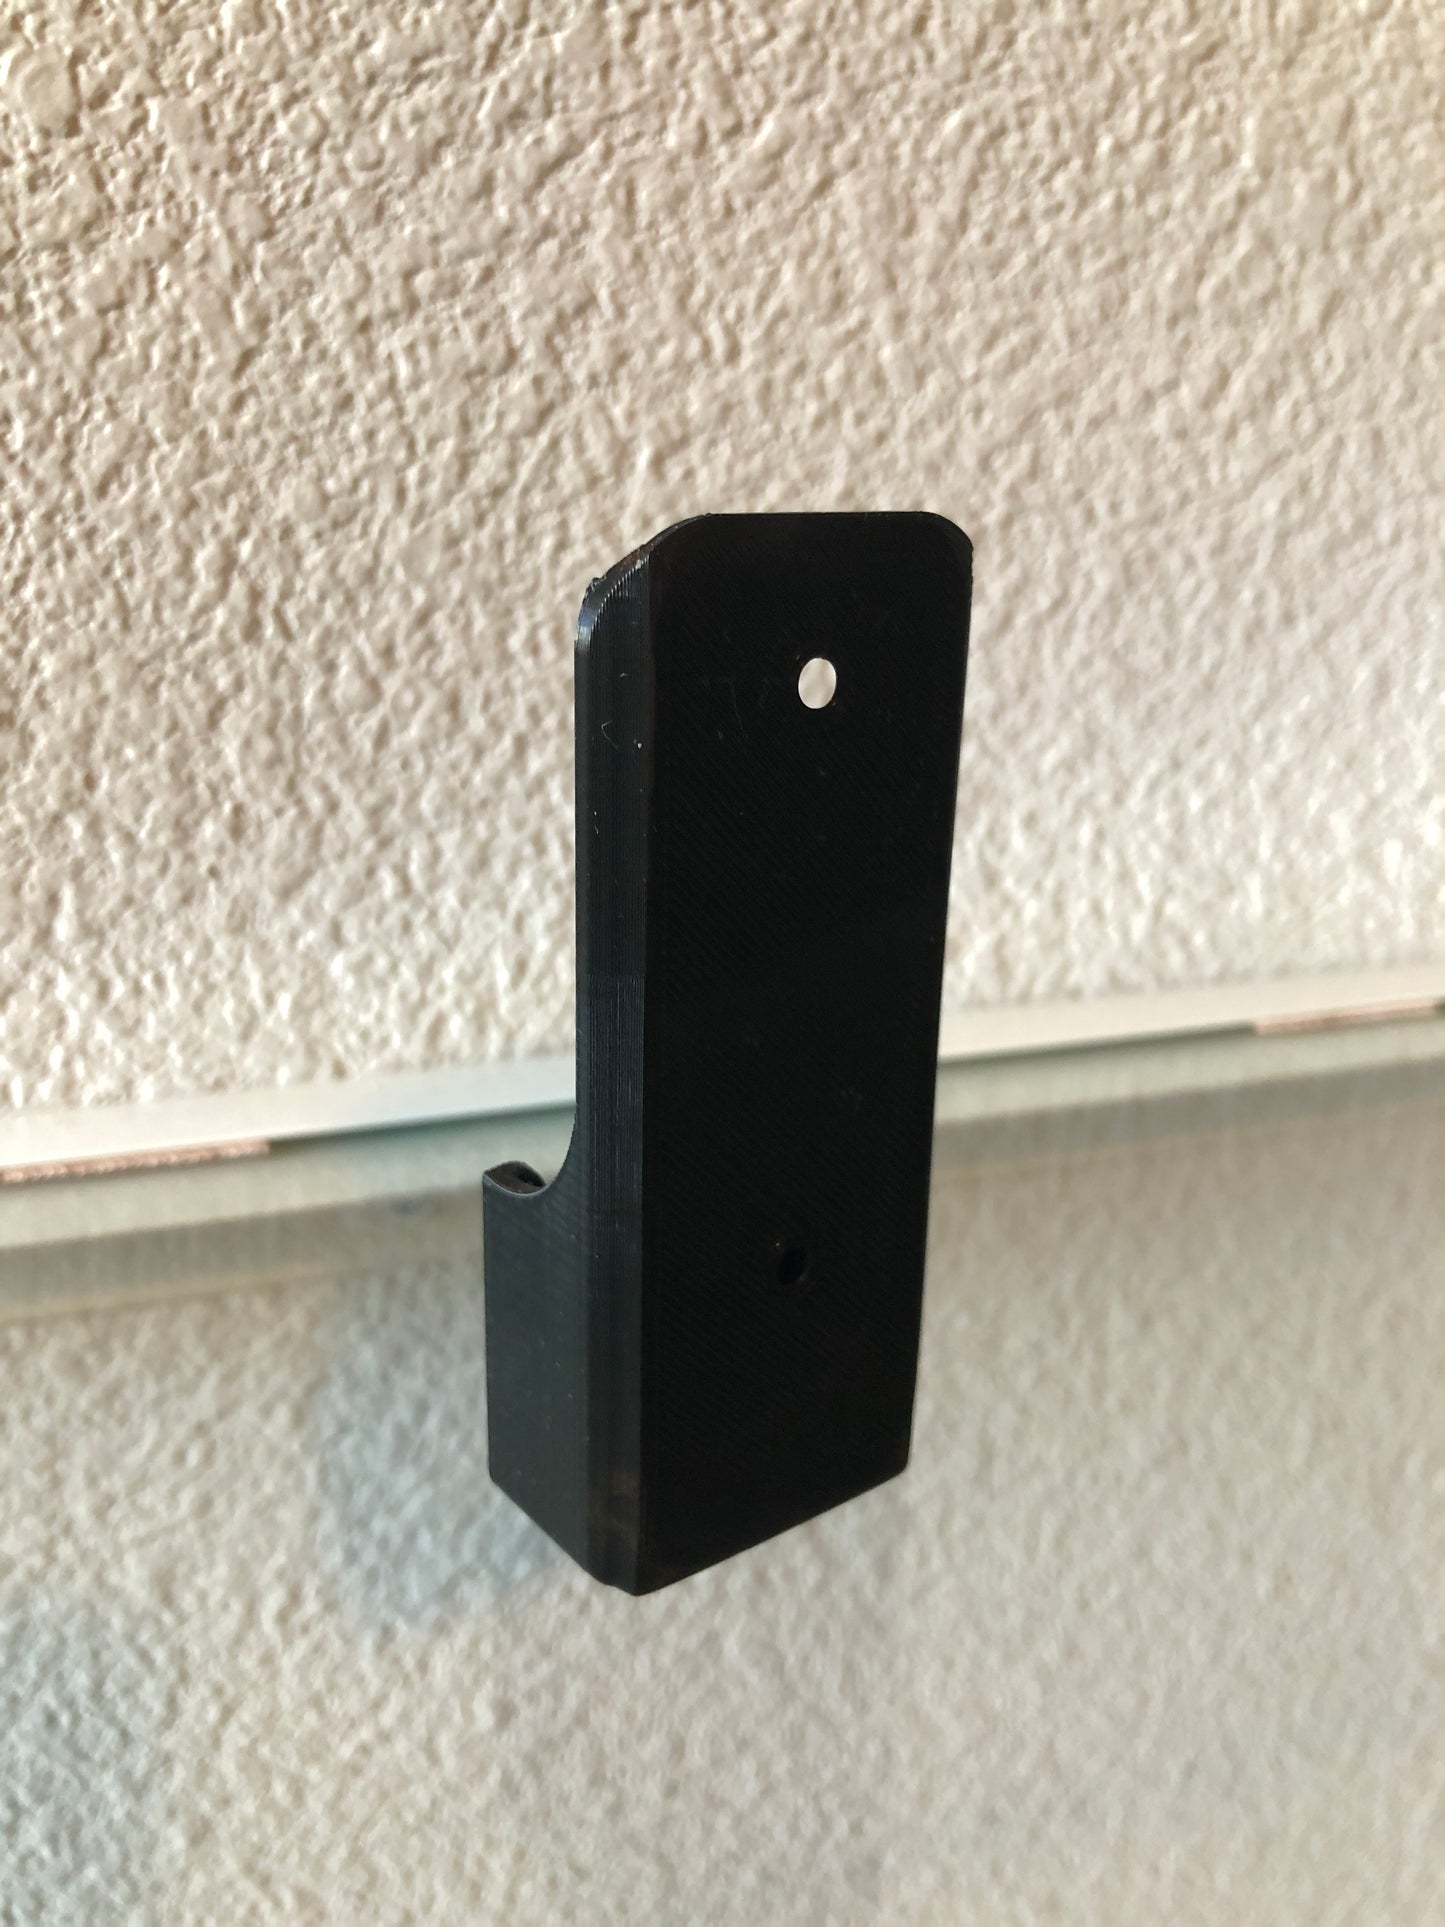 Holder Mount for Home Decorators Ceiling Fan with Adjustable Color Remote